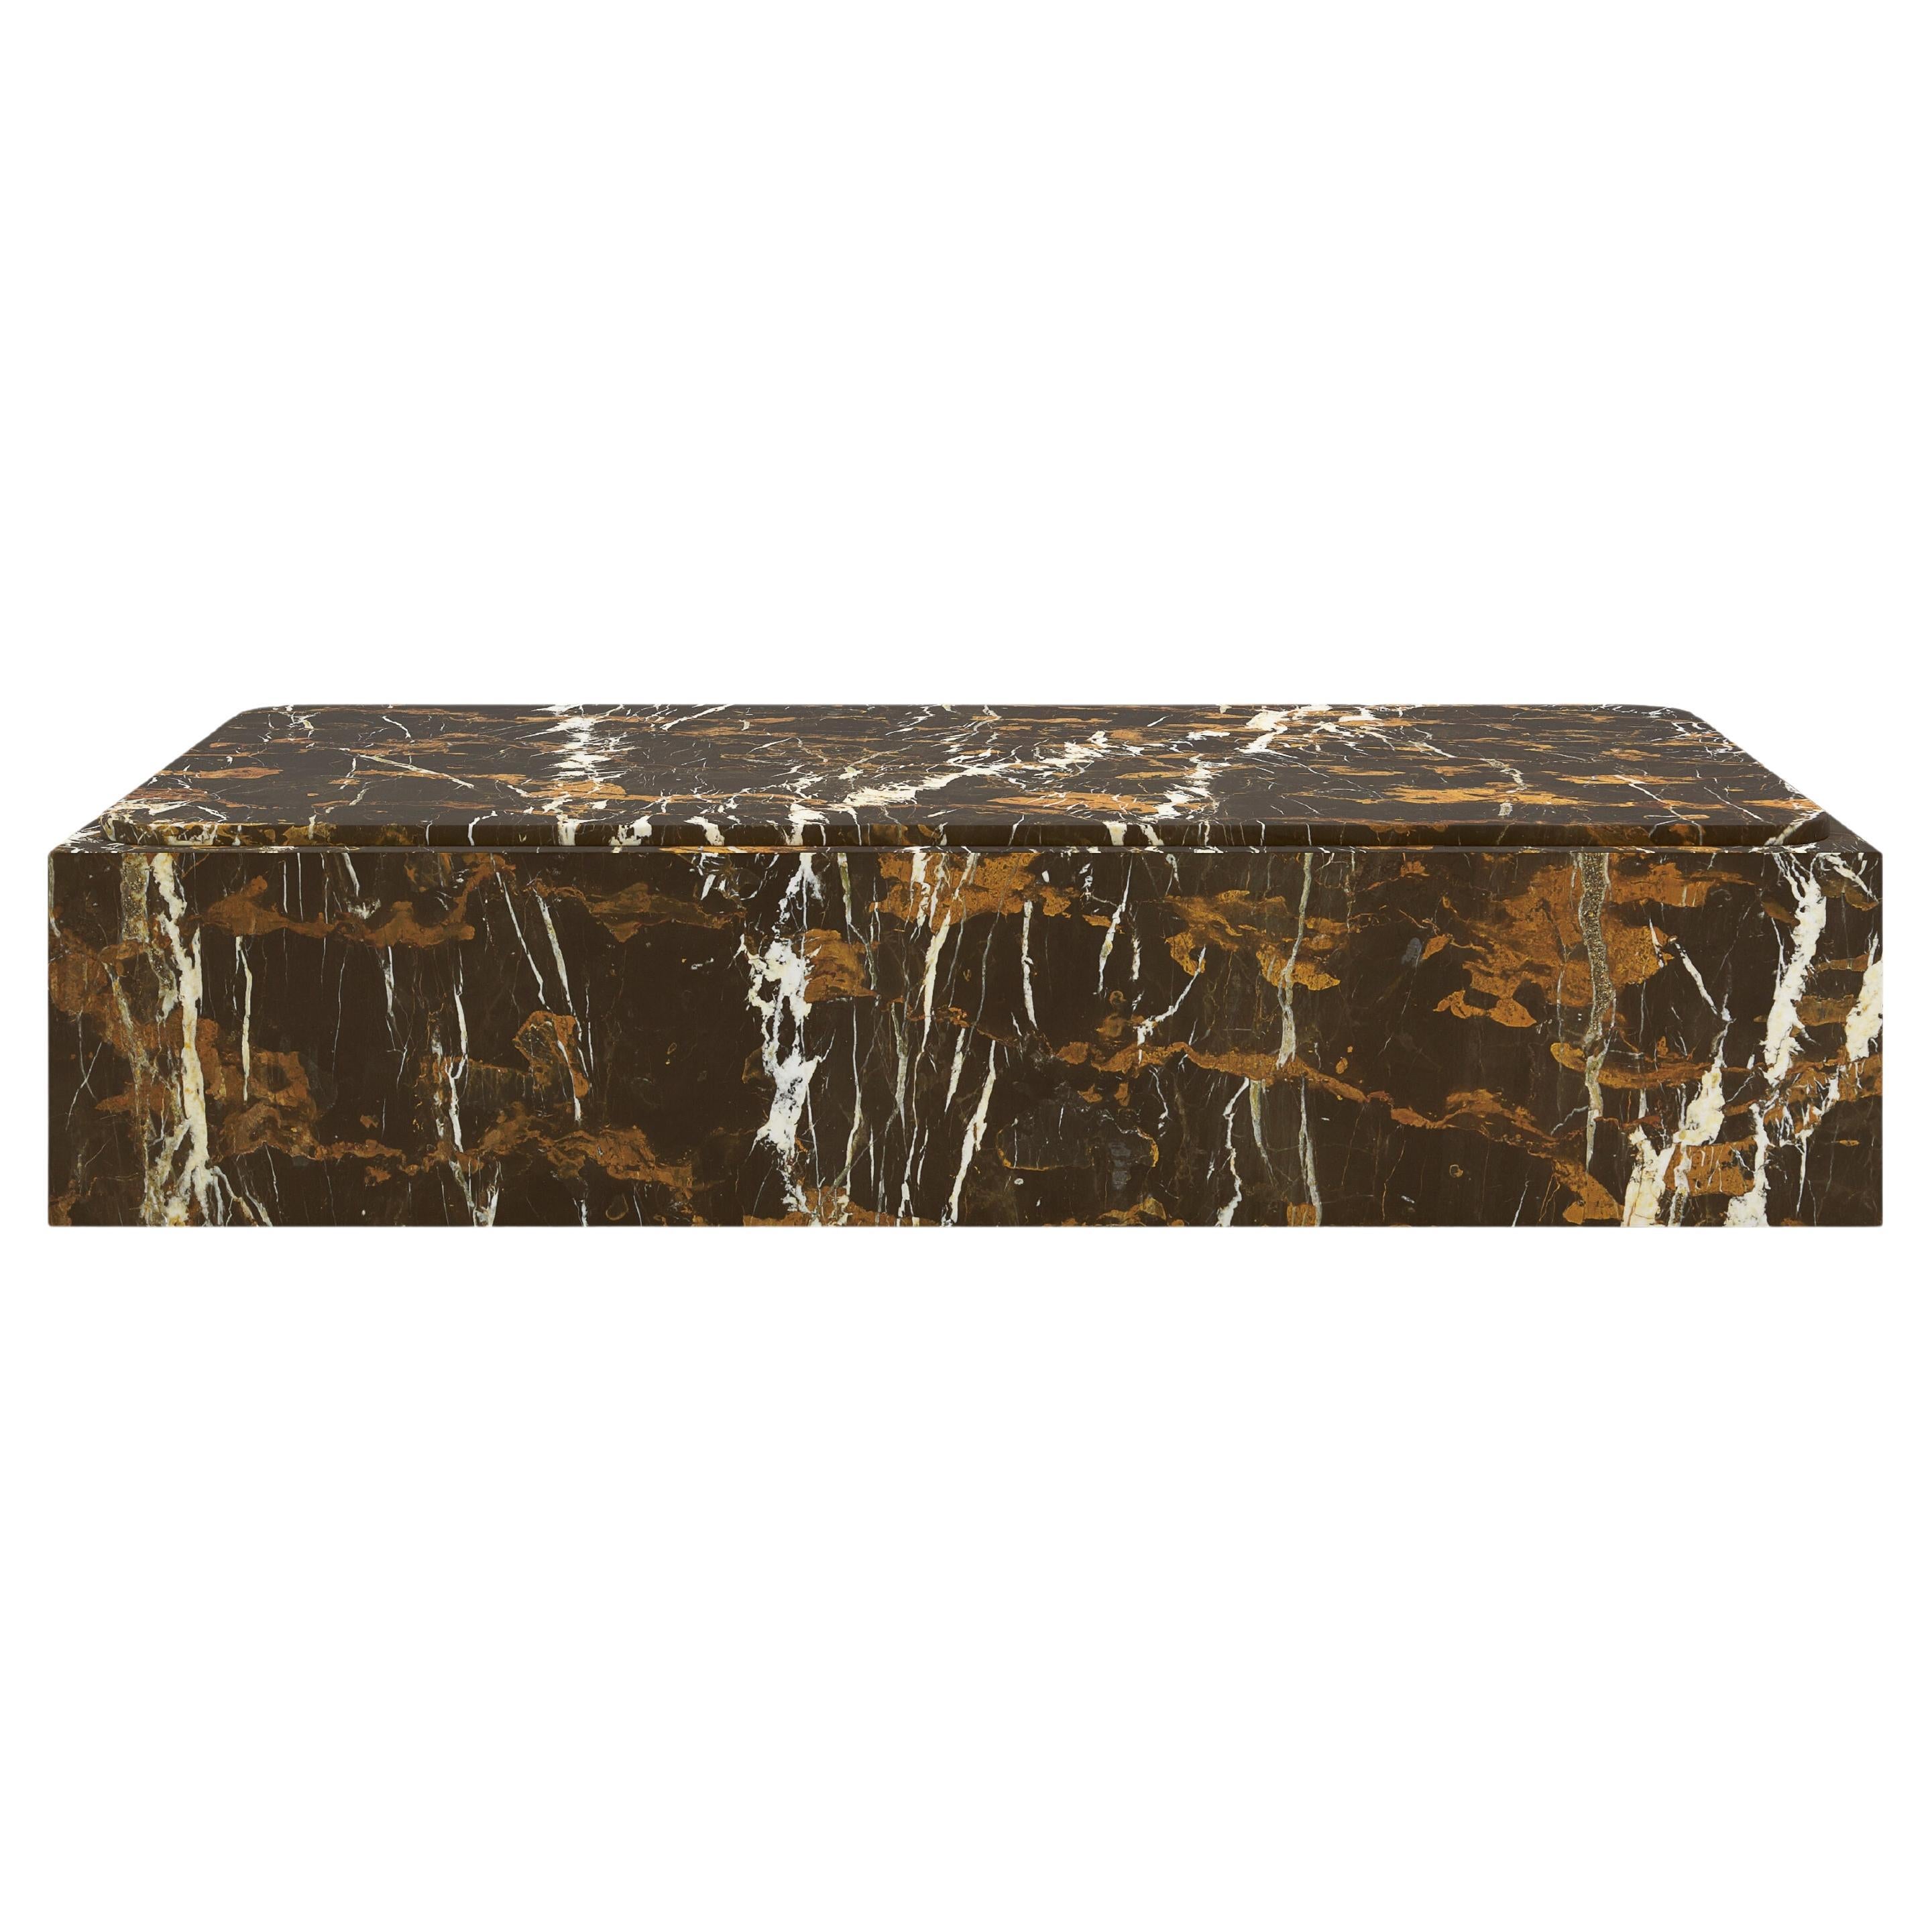 FORM(LA) Cubo Rectangle Plinth Coffee Table 72”L x 42”W x 13”H Nero Marble For Sale